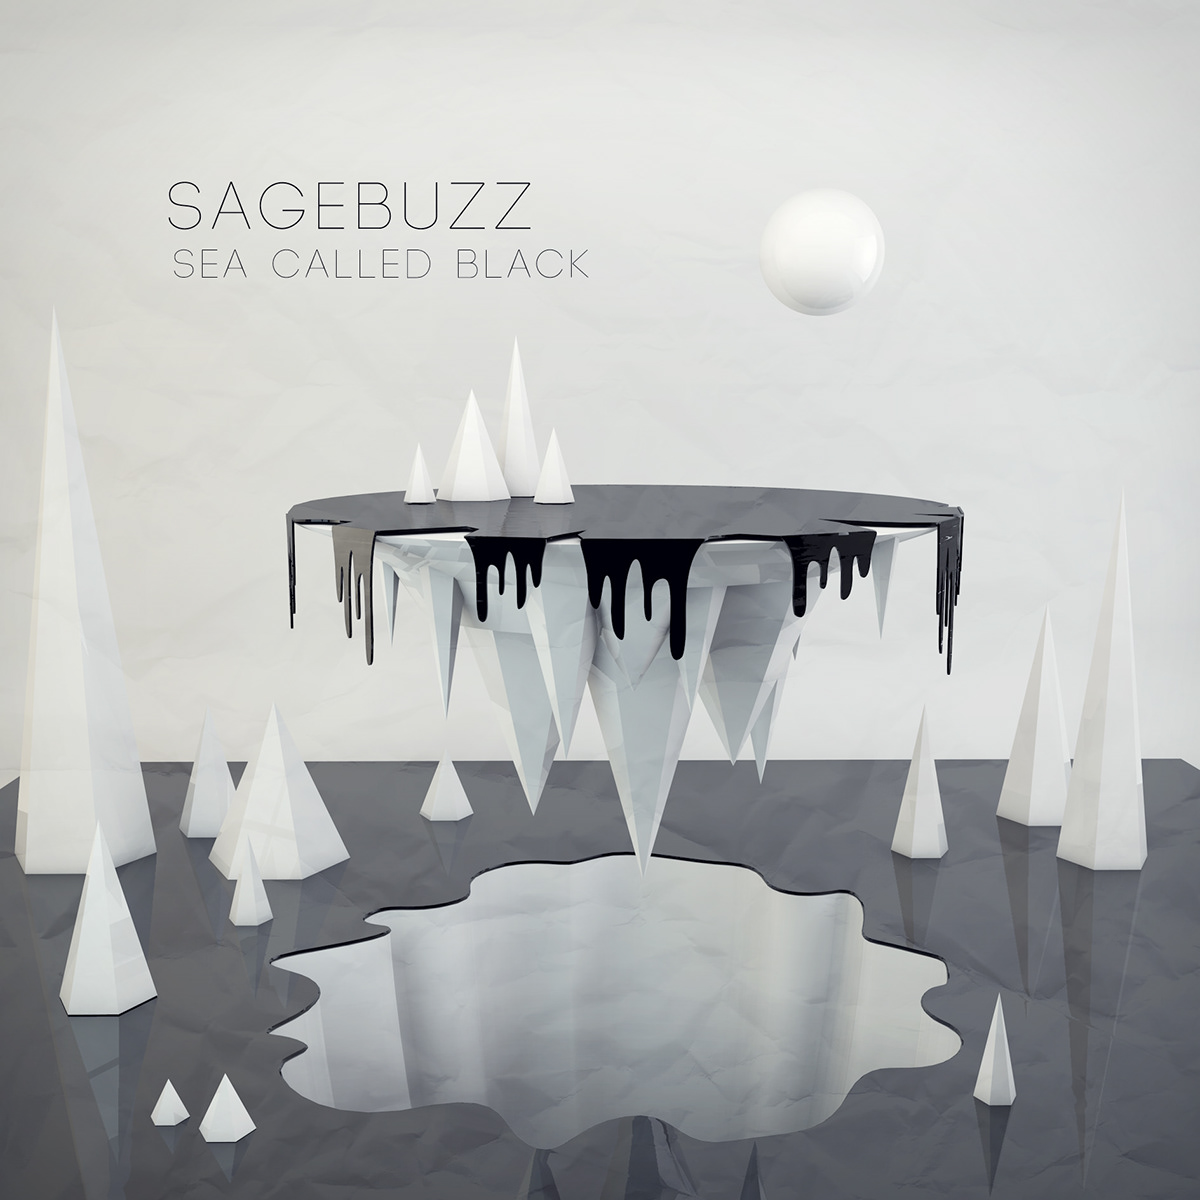 sagebuzz  CD cover cover grunge rock